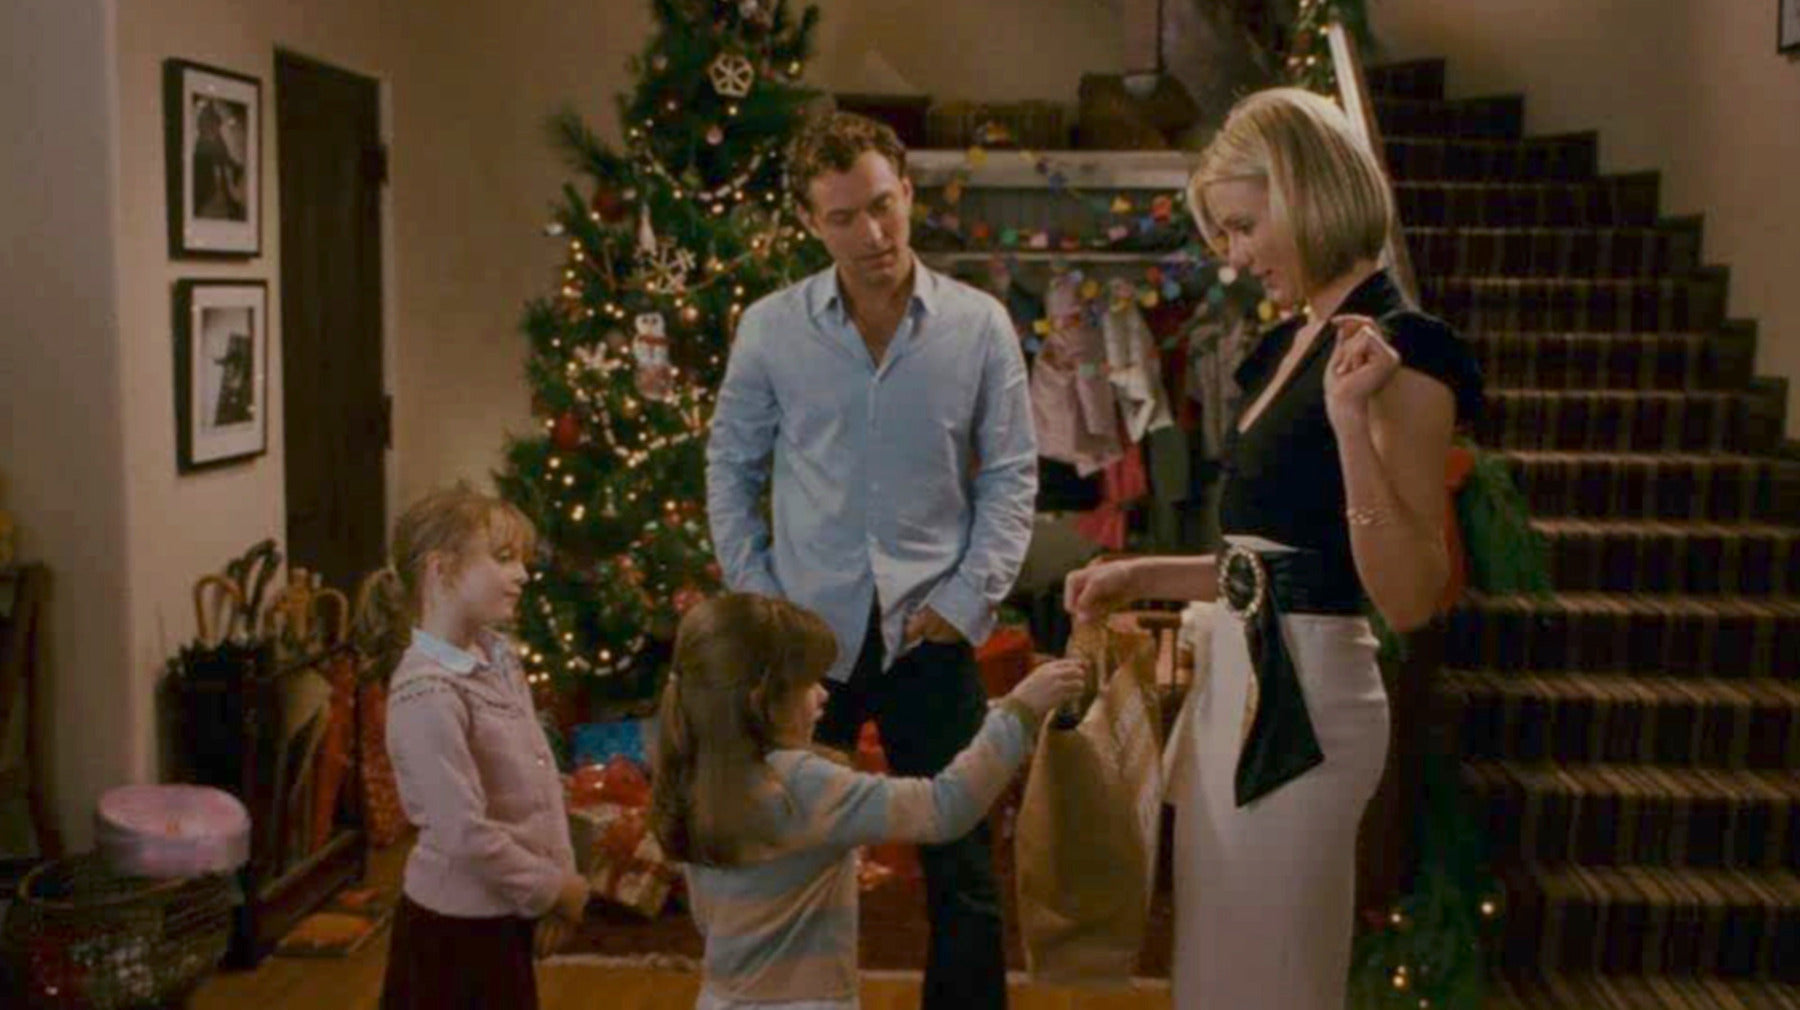 The Holiday Christmas movie